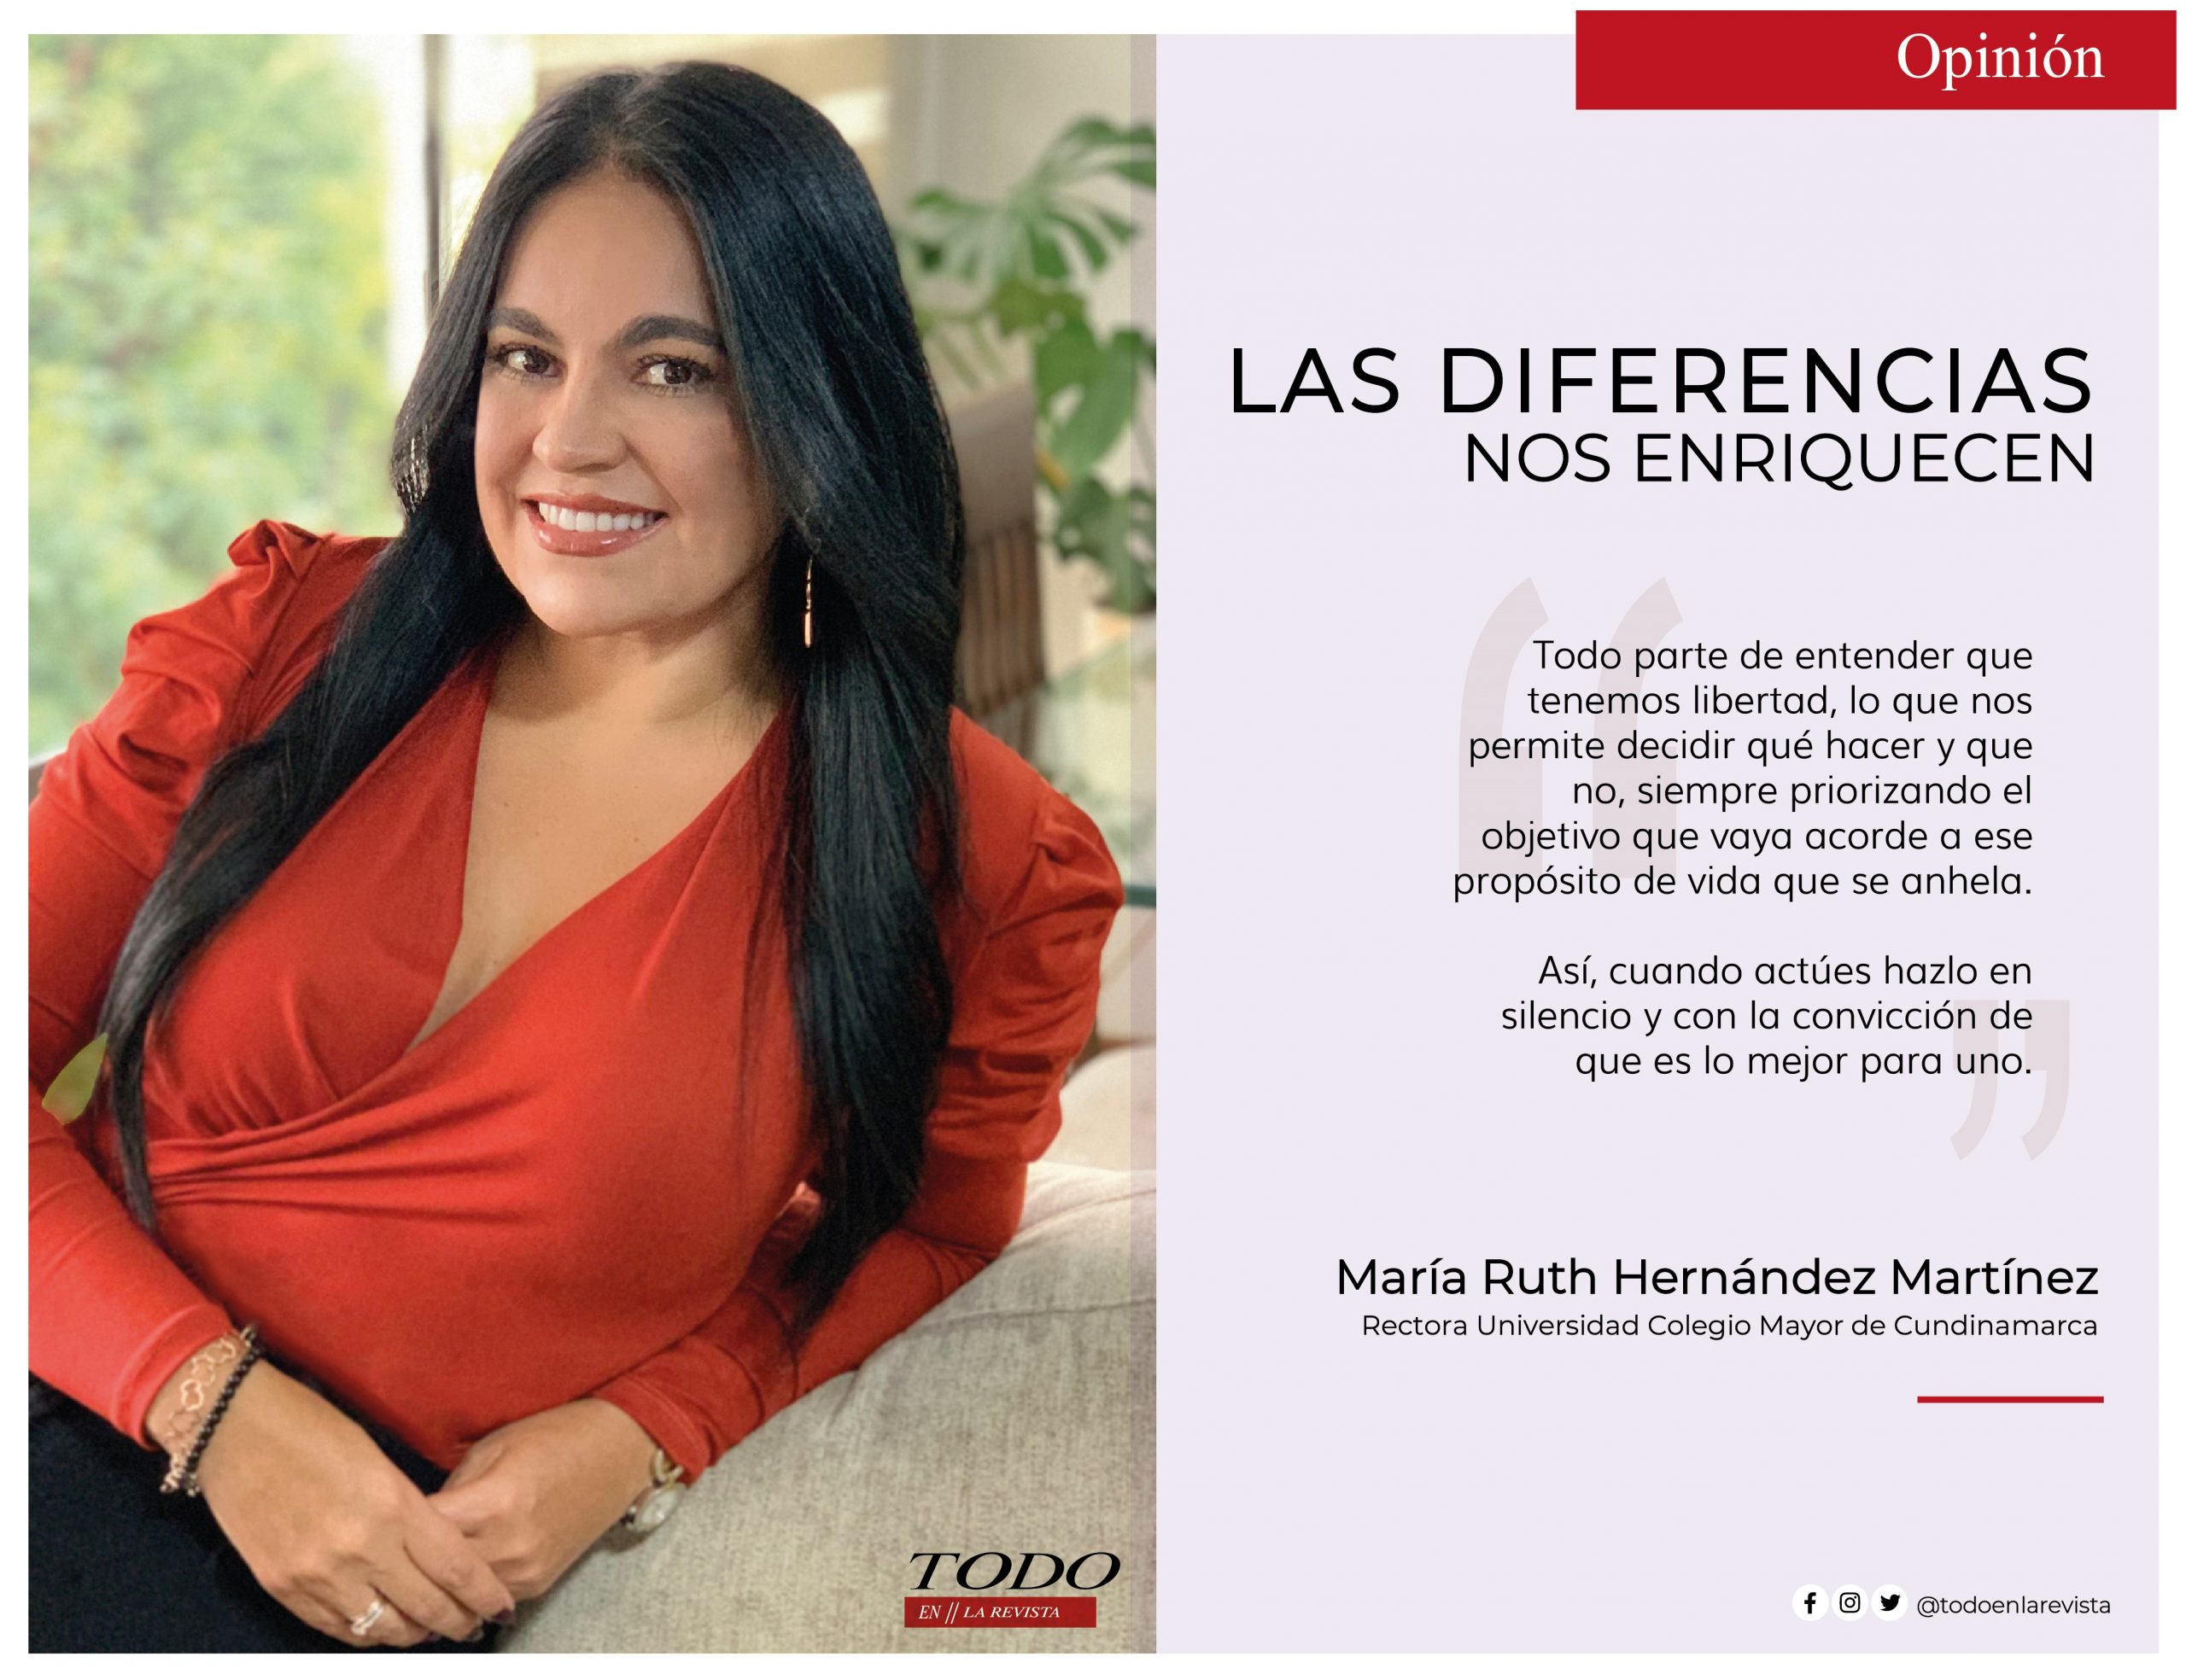 María Ruth Hernández Martínez